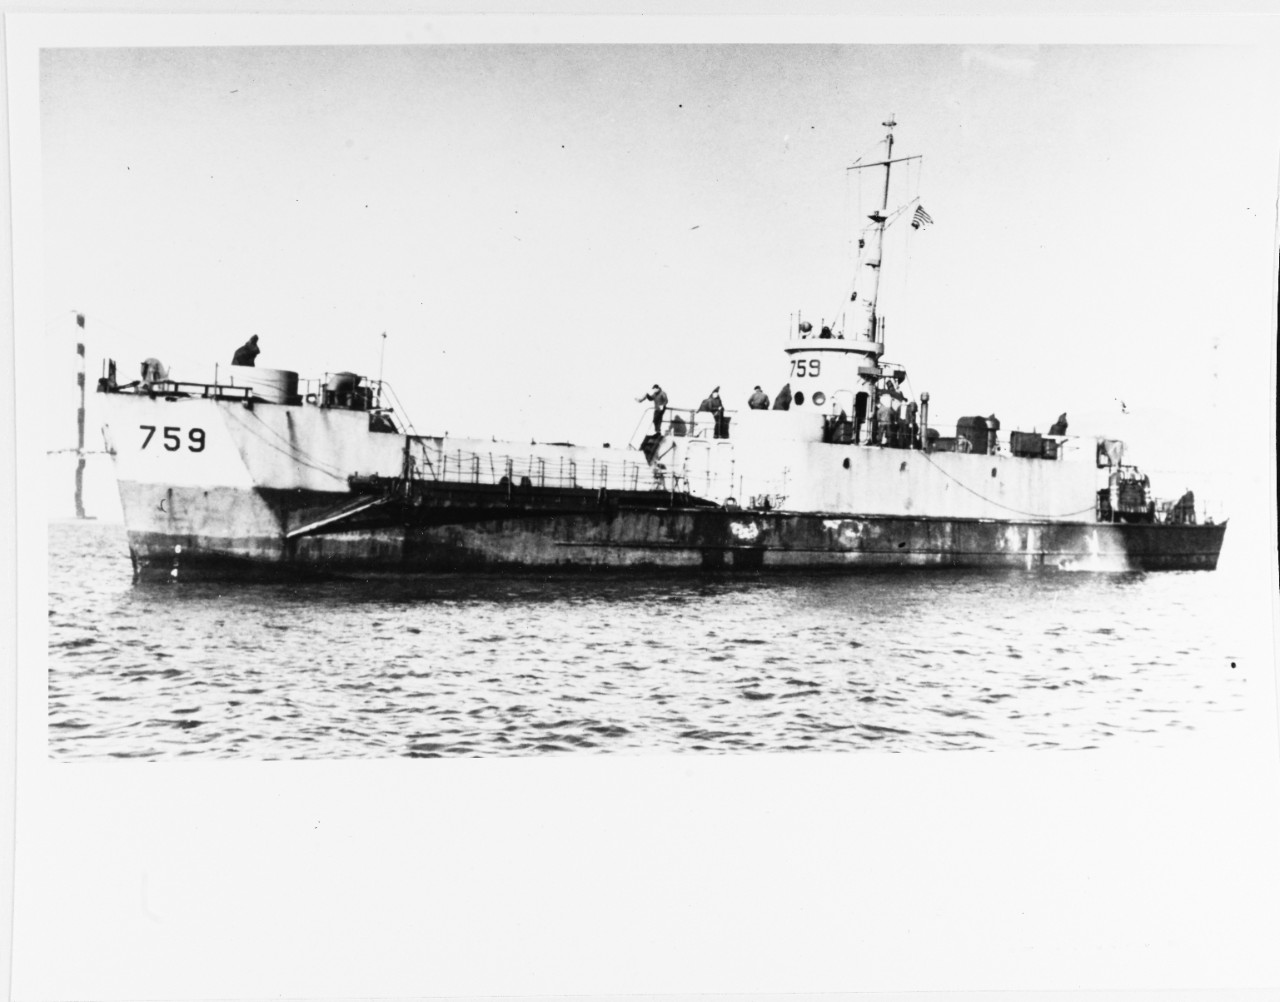 USS LCI-759